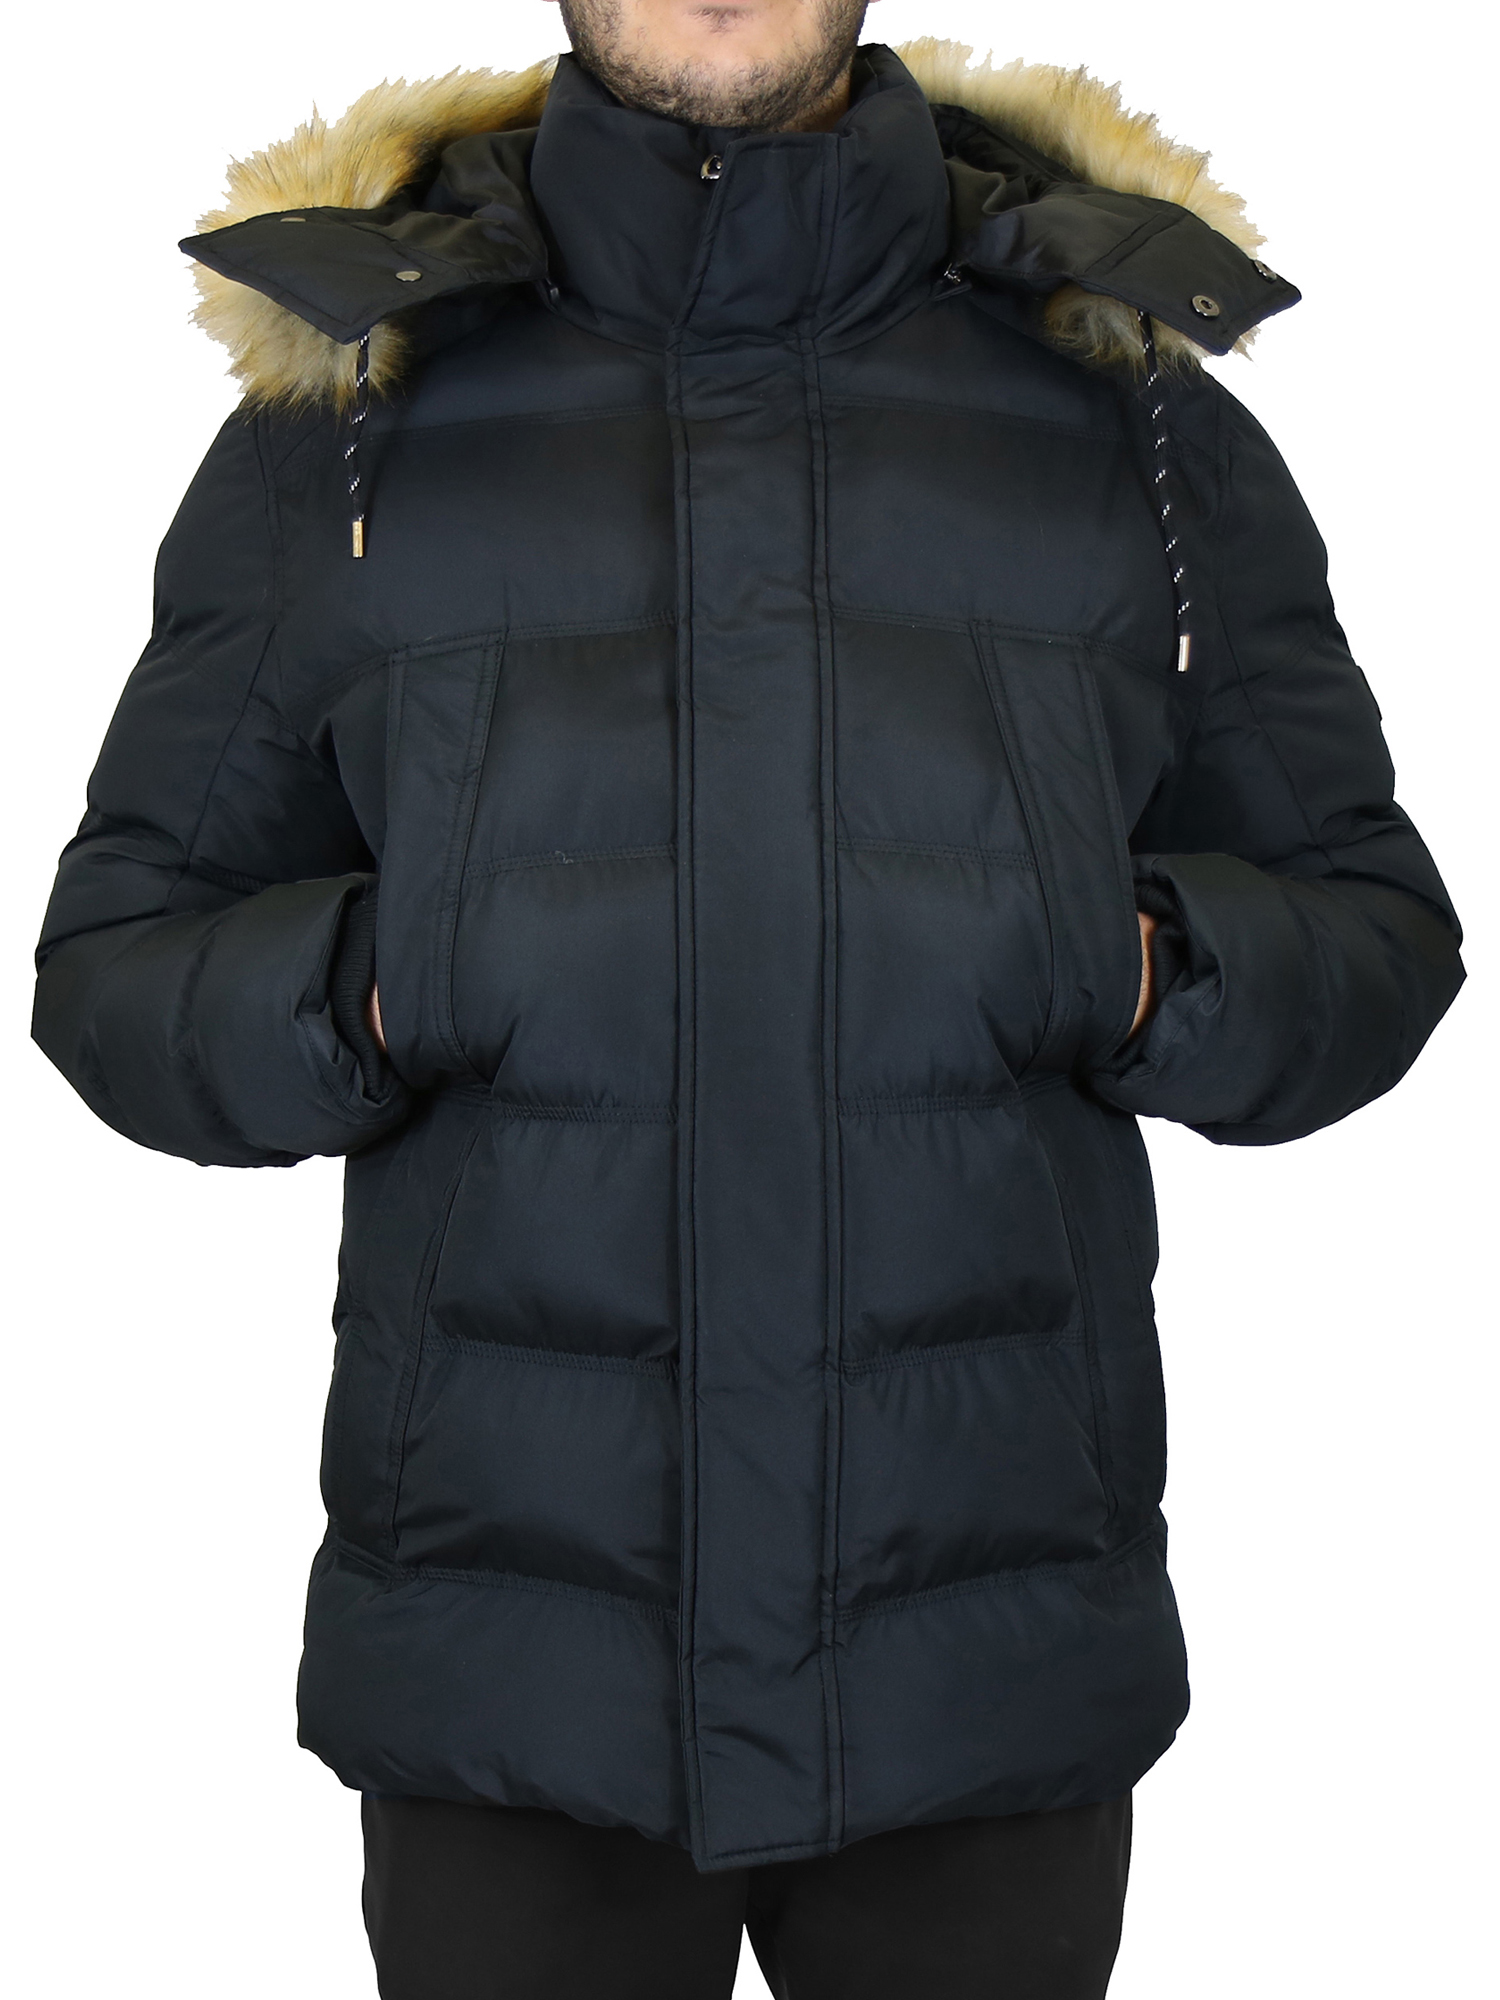 Men's Heavyweight Long Bubble Parka Jacket Winter Coat - image 1 of 5